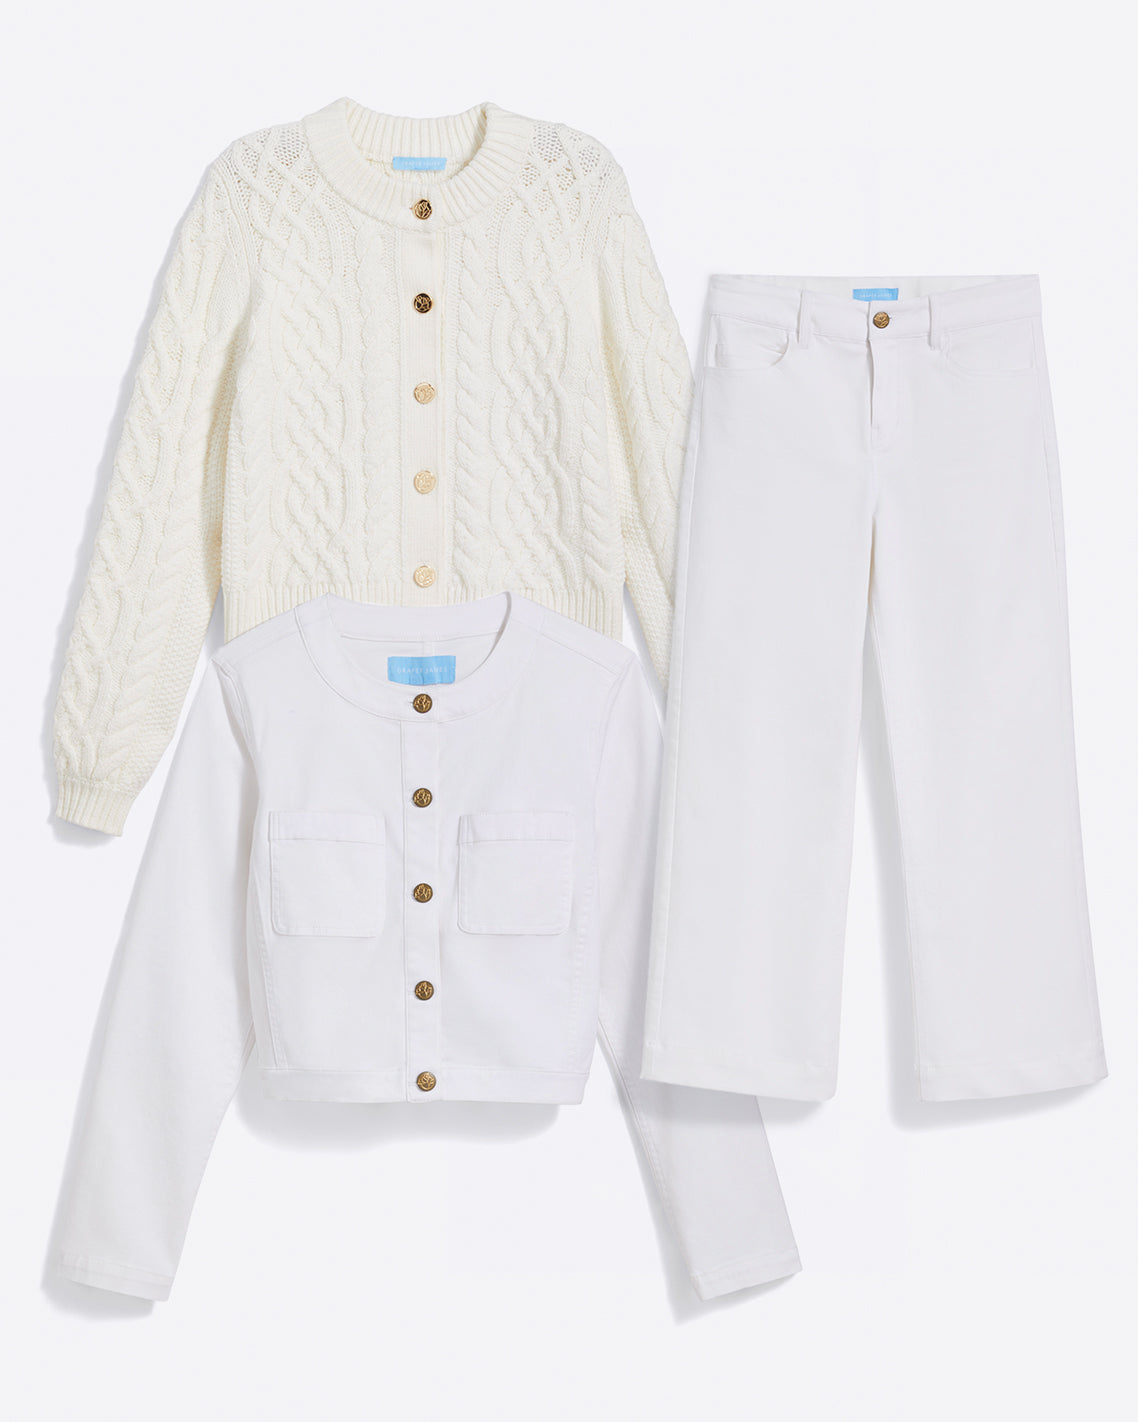 Summer Whites Style Kit